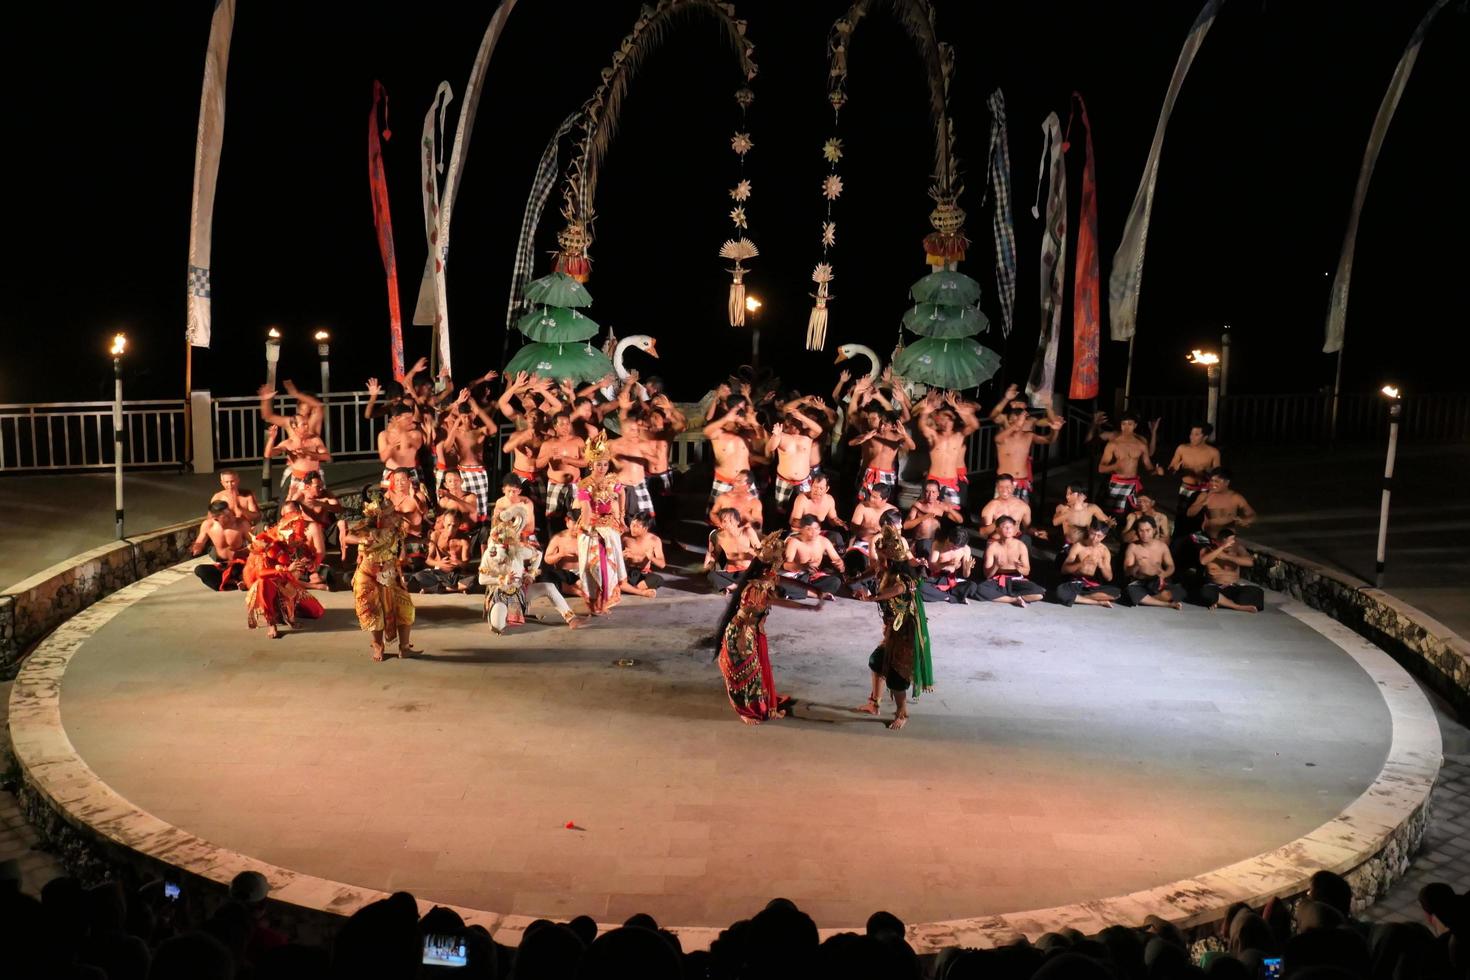 Kecak dance performance on Melasti Beach, bali, Indonesia photo